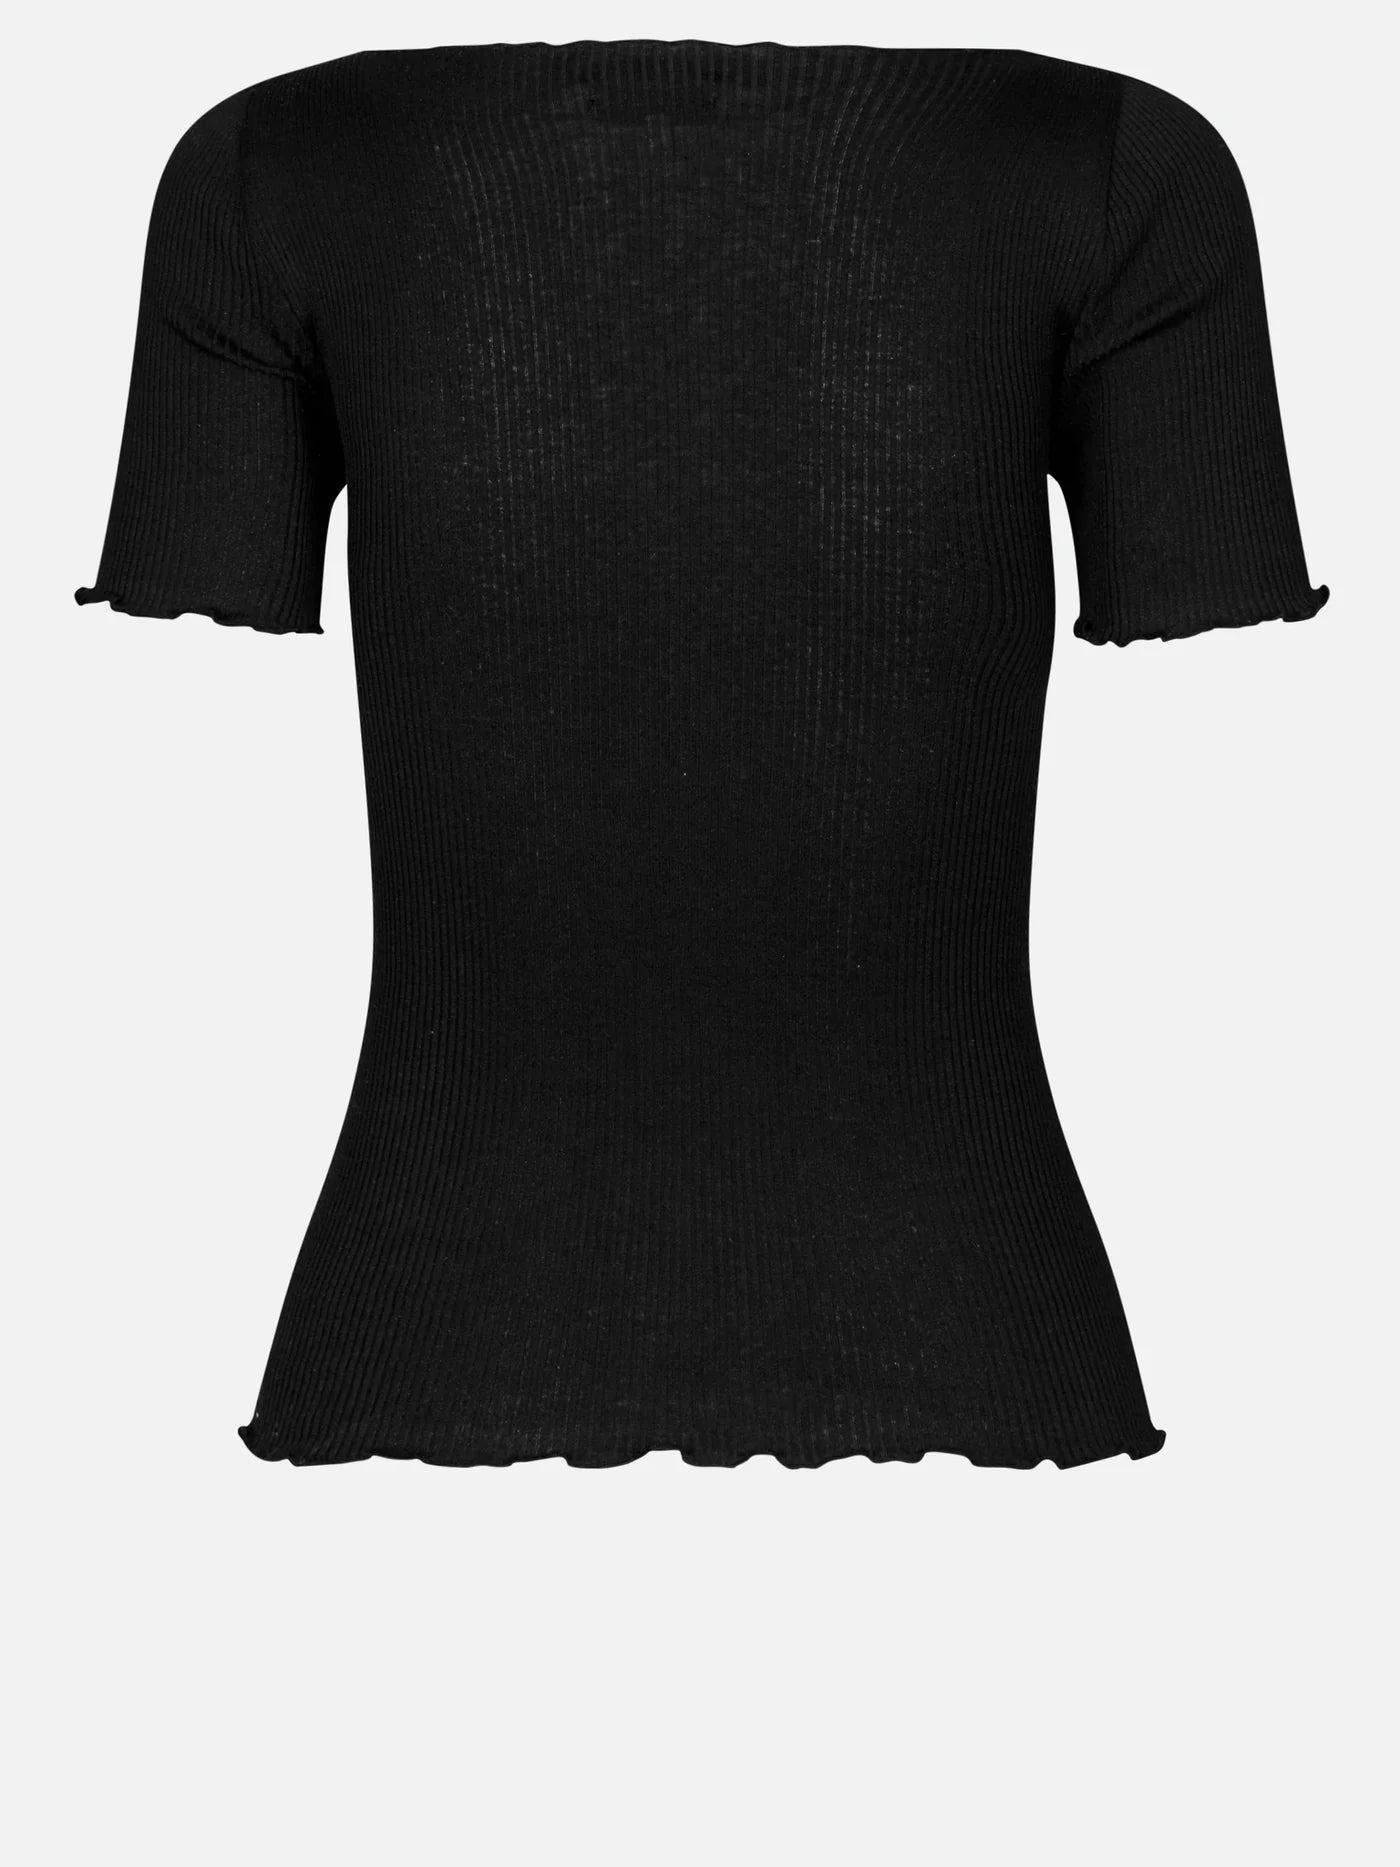 Rosemunde black ribbed silk blend Boat Neck T-Shirt with ruffled edges.